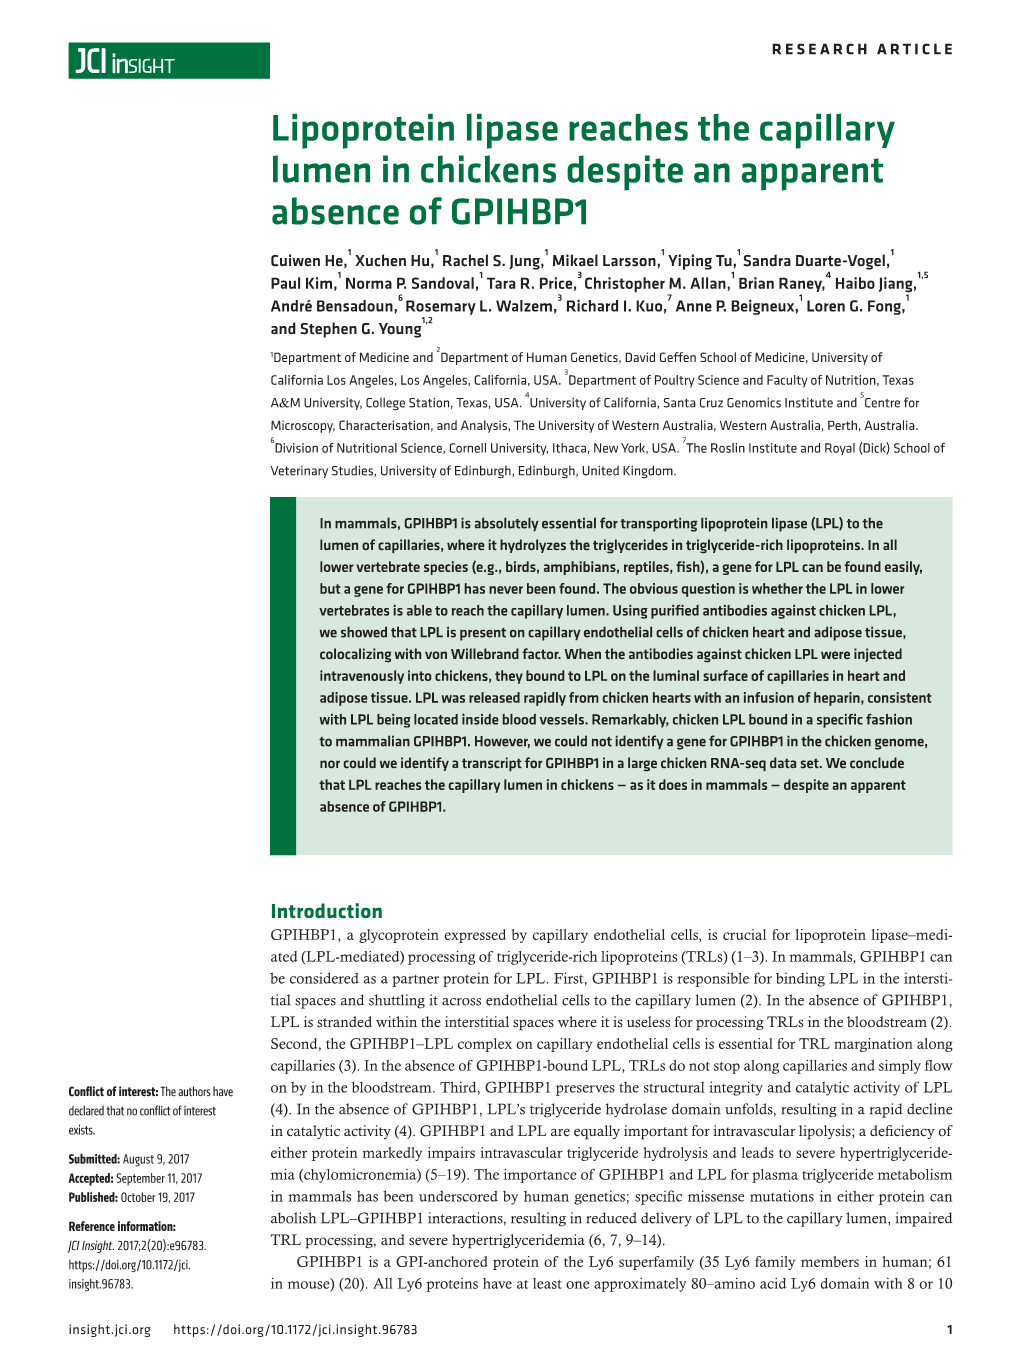 Lipoprotein Lipase Reaches the Capillary Lumen in Chickens Despite an Apparent Absence of GPIHBP1